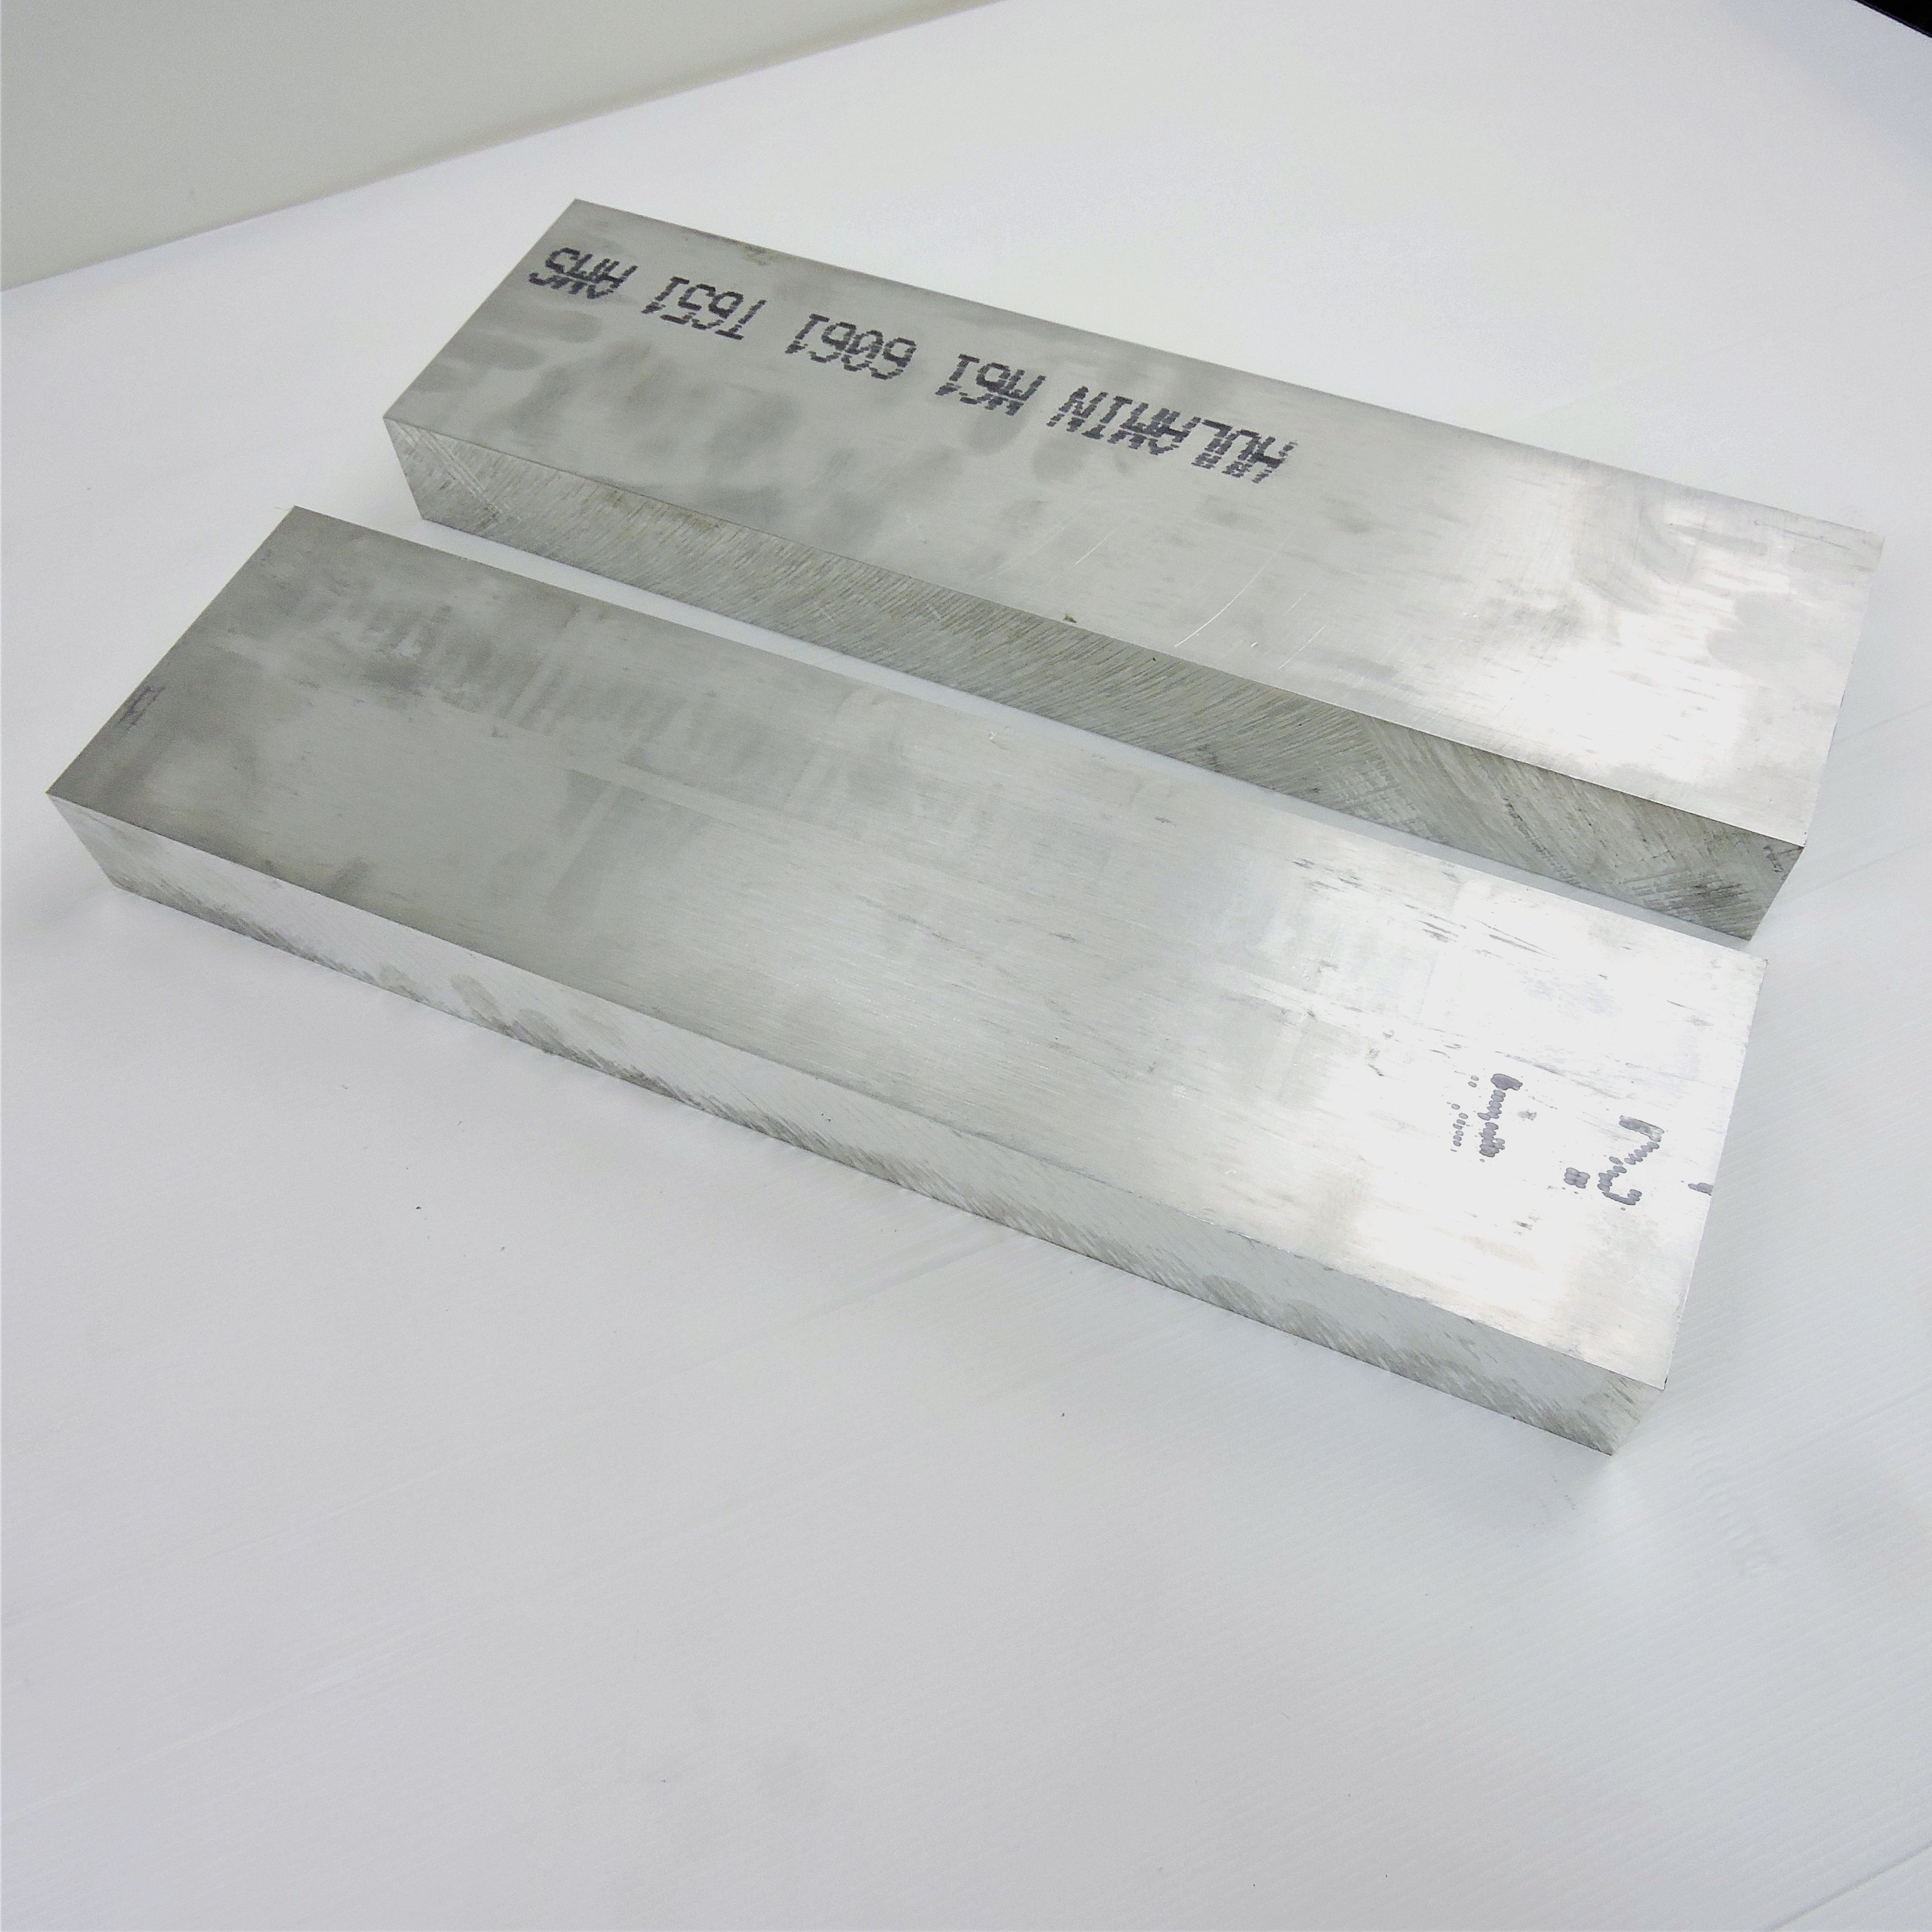 1.75" thick 1 3/4 Aluminum 6061 PLATE 3.375" x 10.25" Long QTY 2 sku 176228 eBay